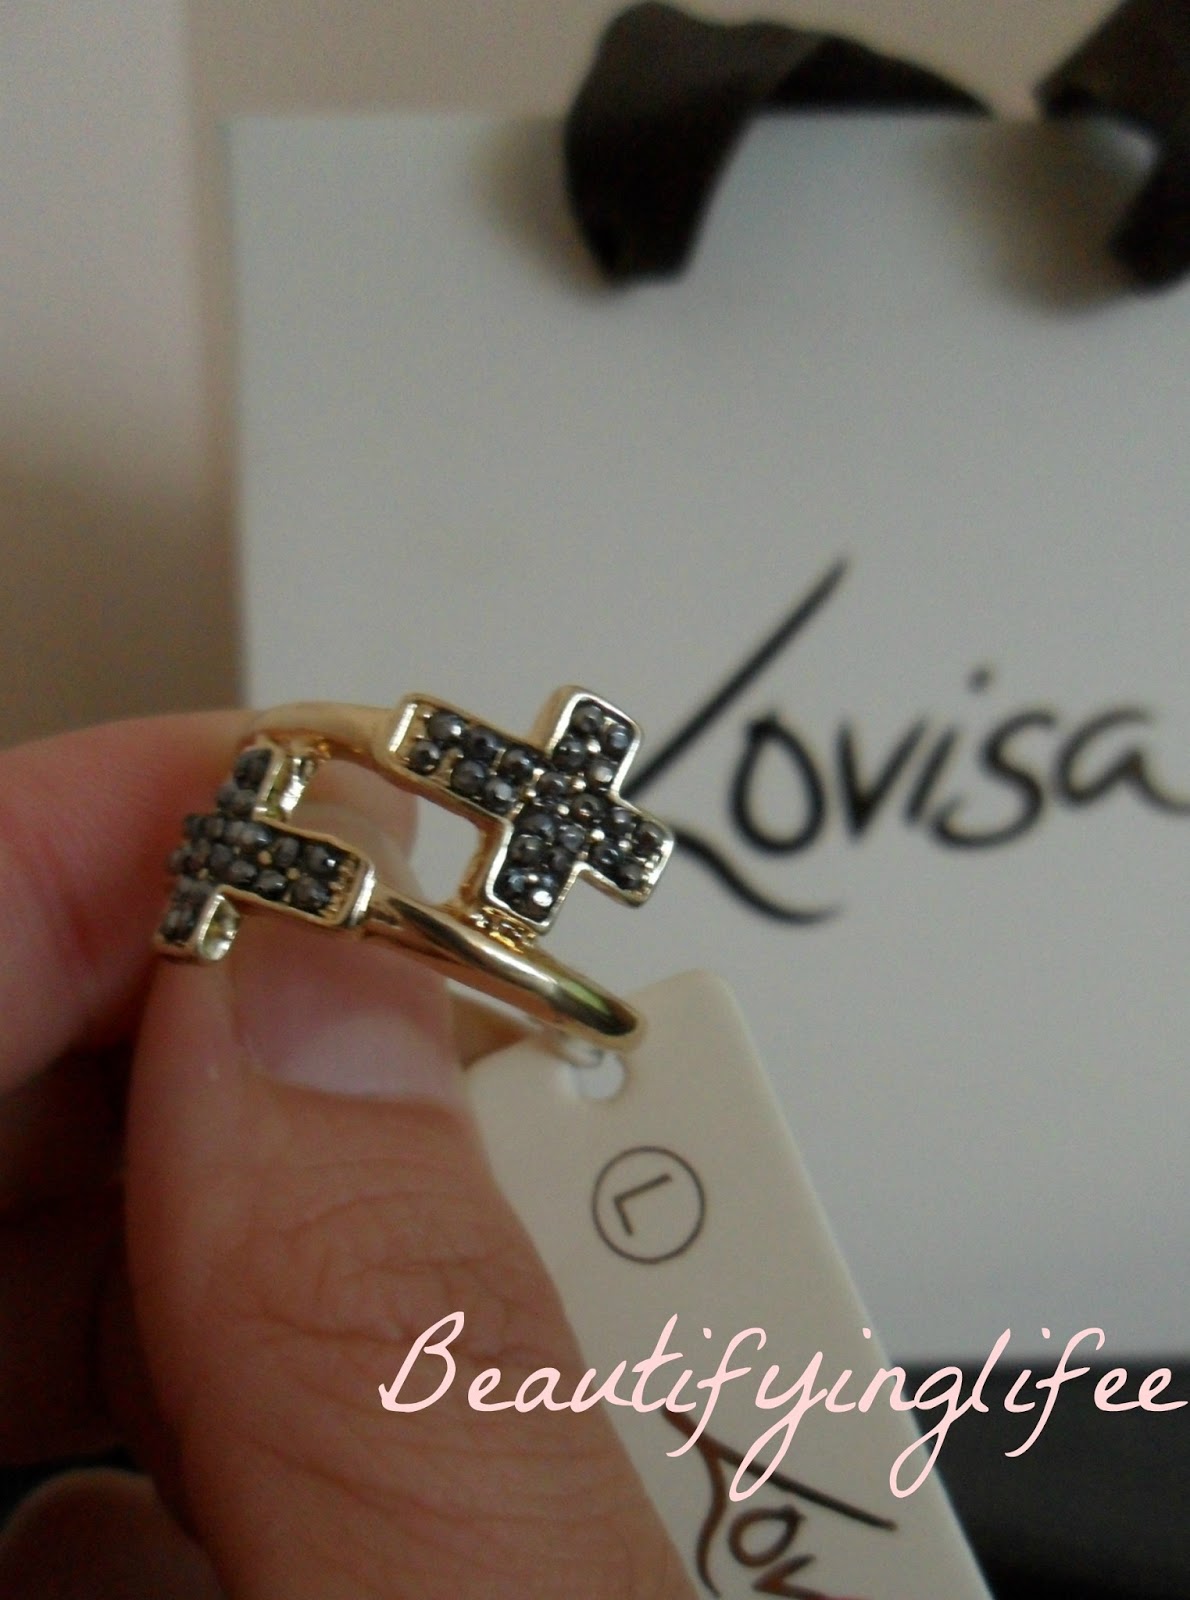 LOVISA#Jewellery Shopping2021/Lovisa jewellery sale Earring,ring